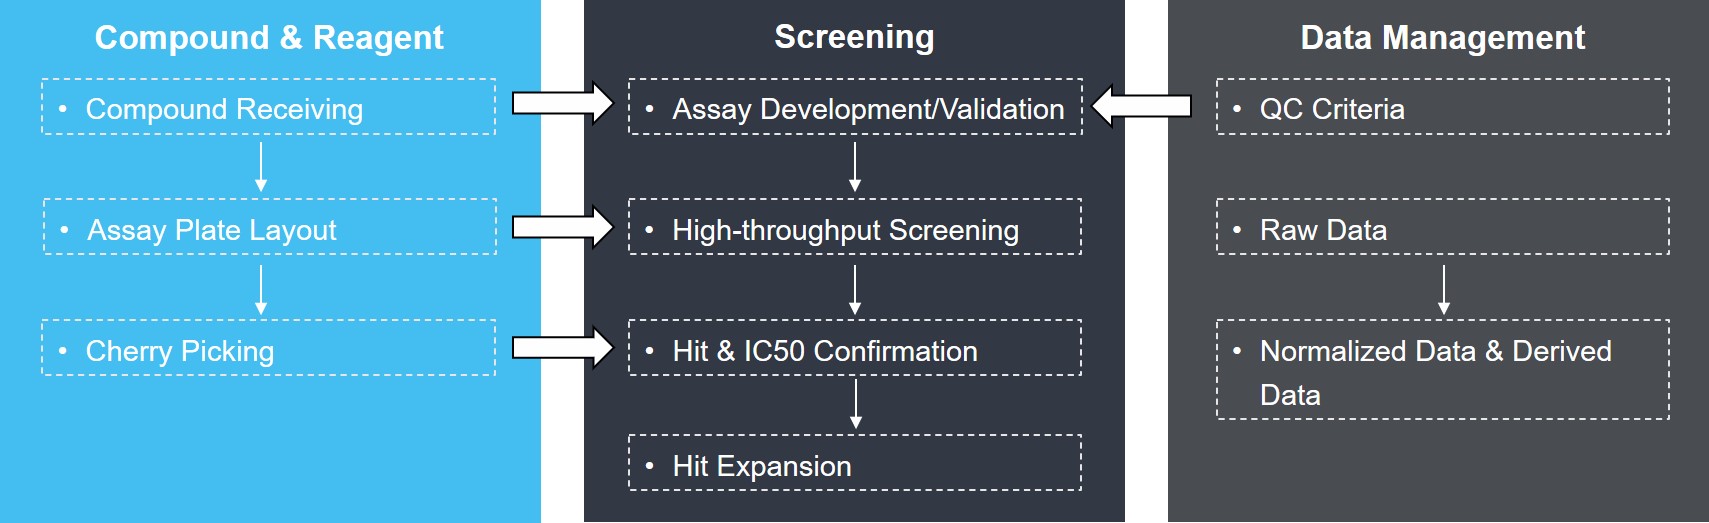 High-throughput Screening (HTS)